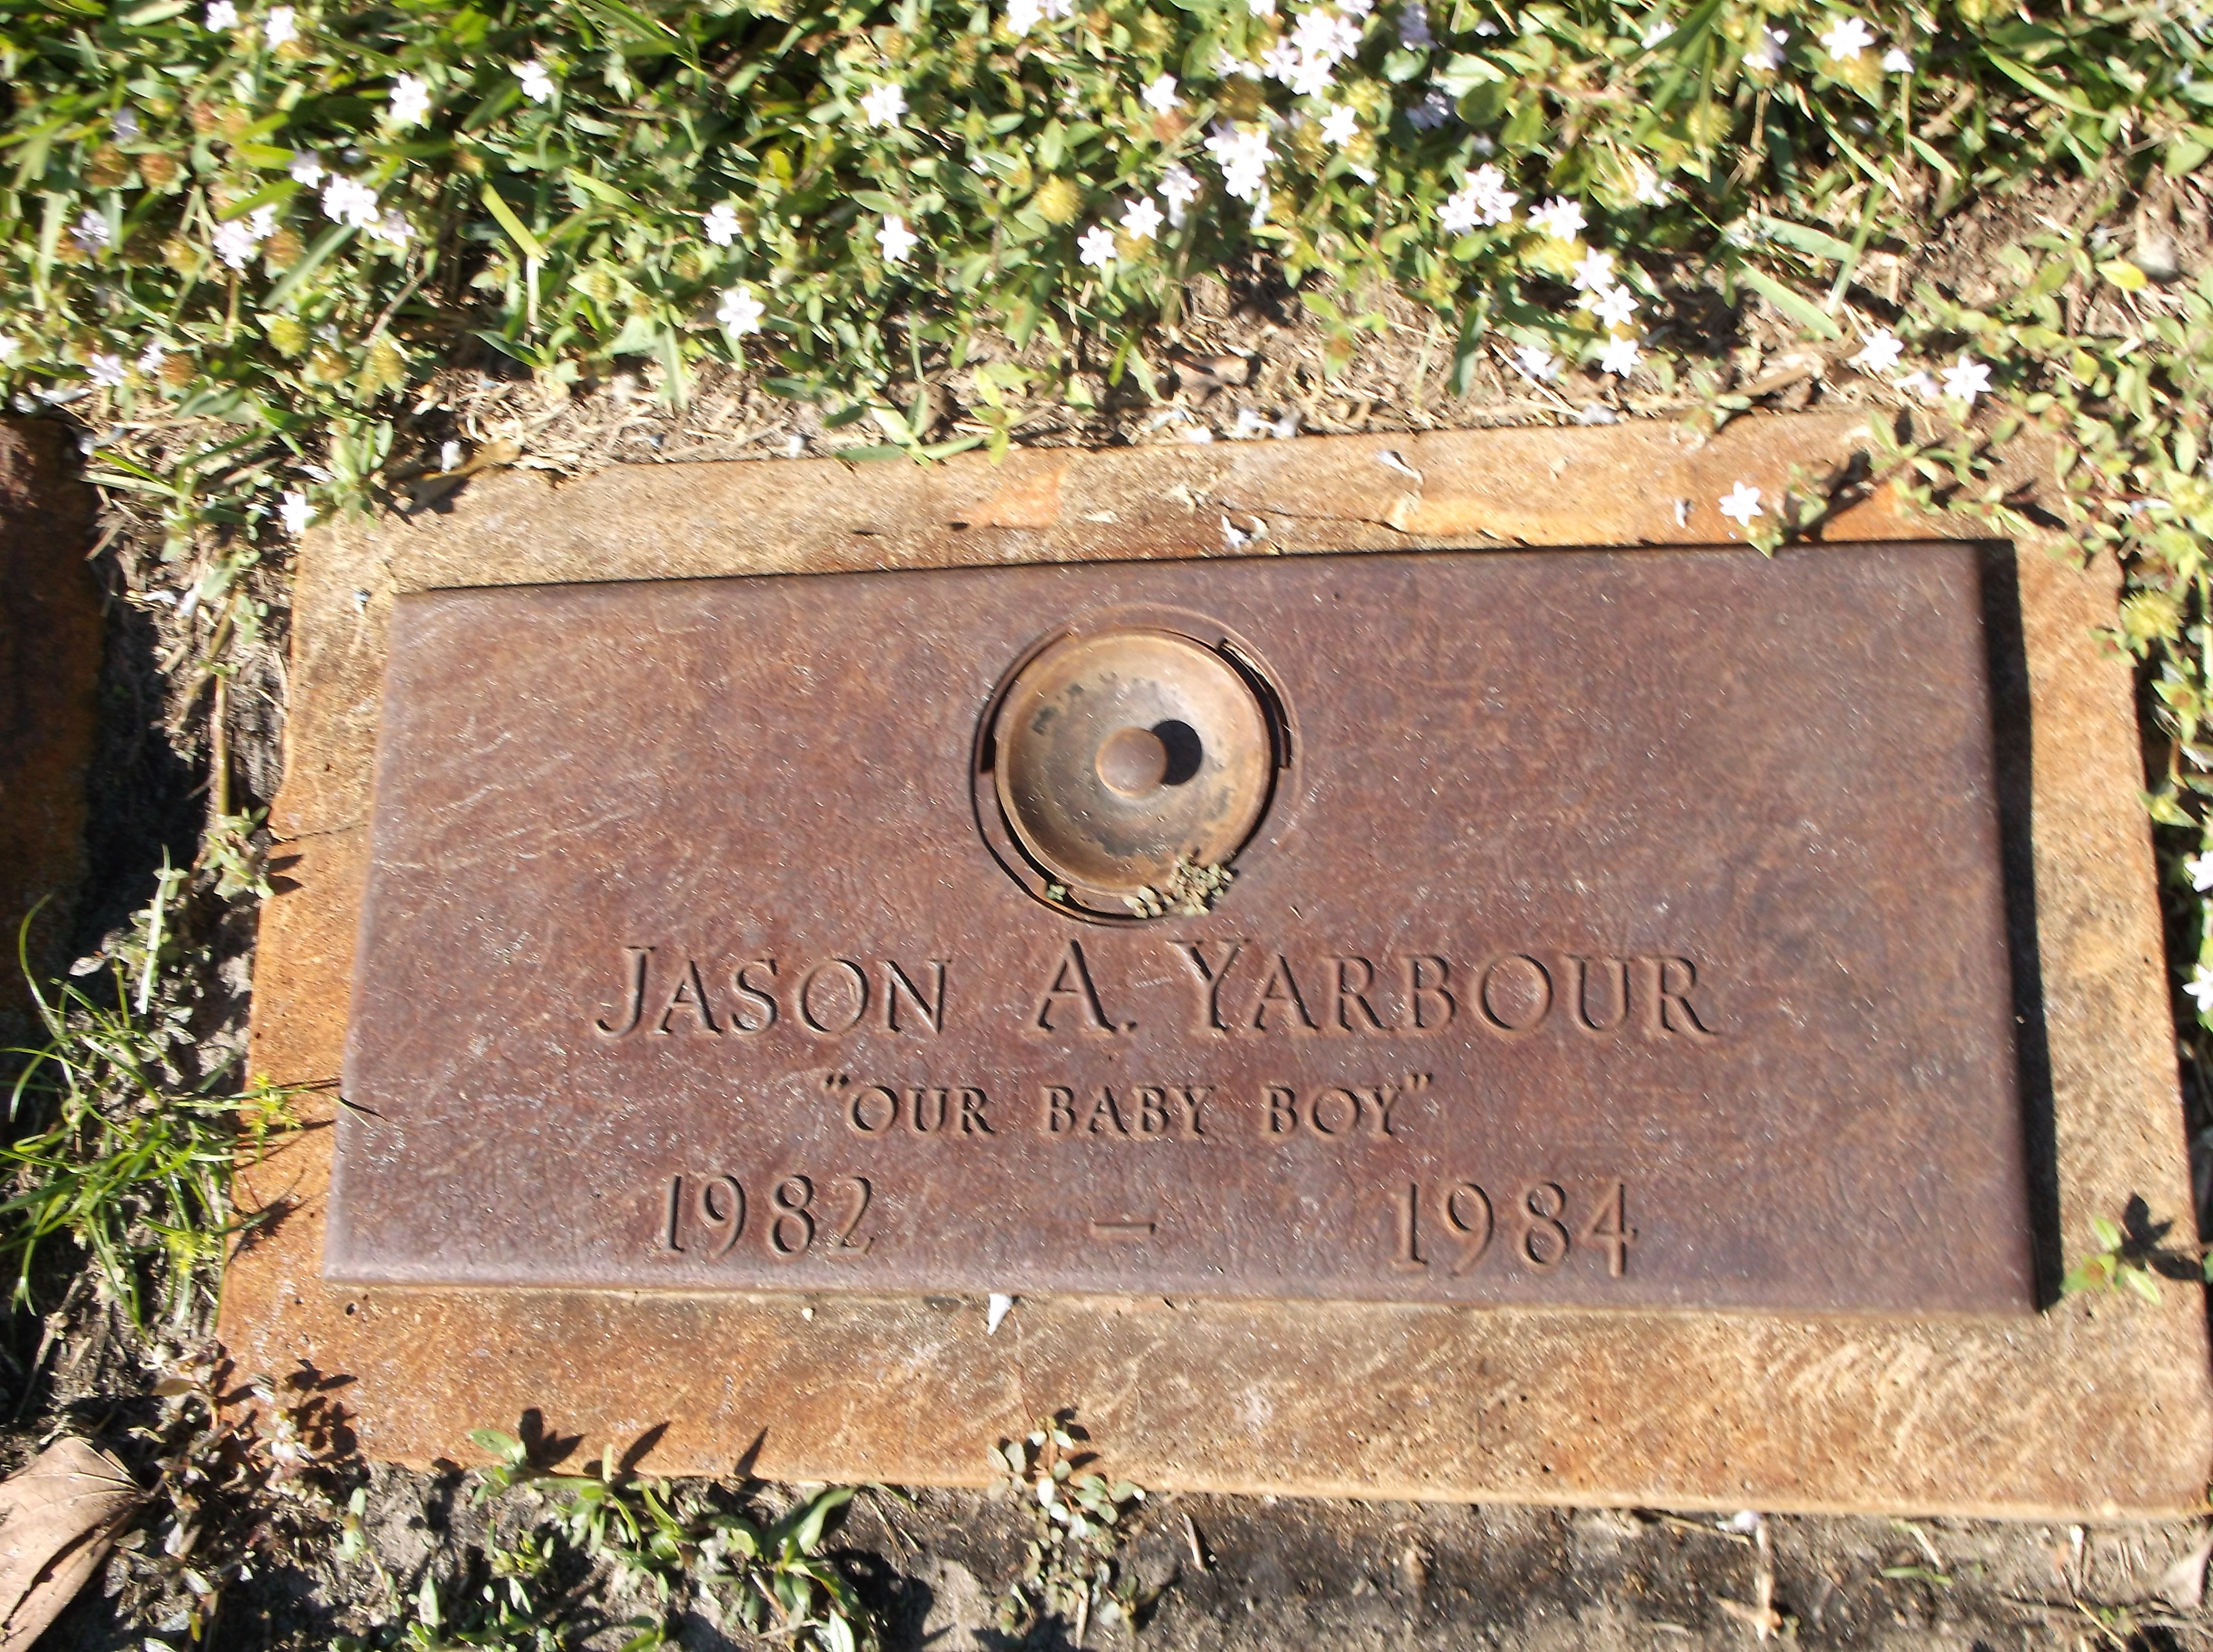 Jason A Yarbour